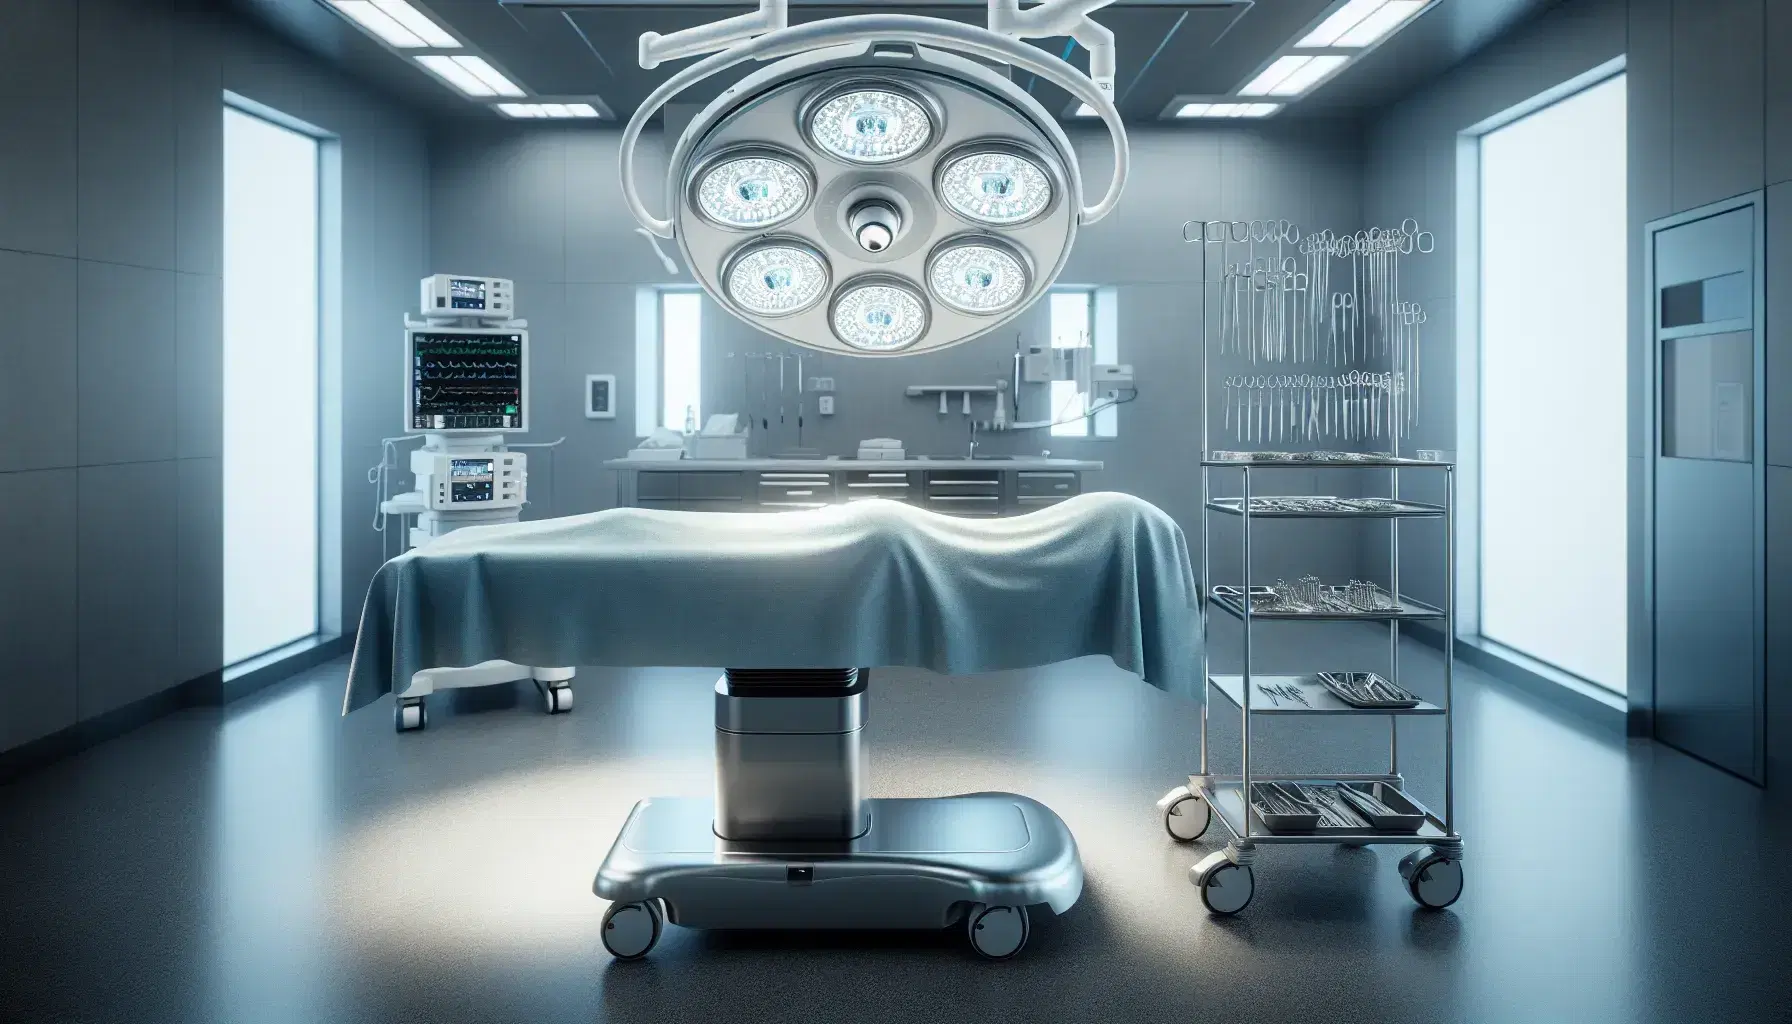 Sala de operaciones moderna con mesa quirúrgica cubierta por sábana azul, lámpara quirúrgica LED y anestesiólogo junto a máquina de anestesia.